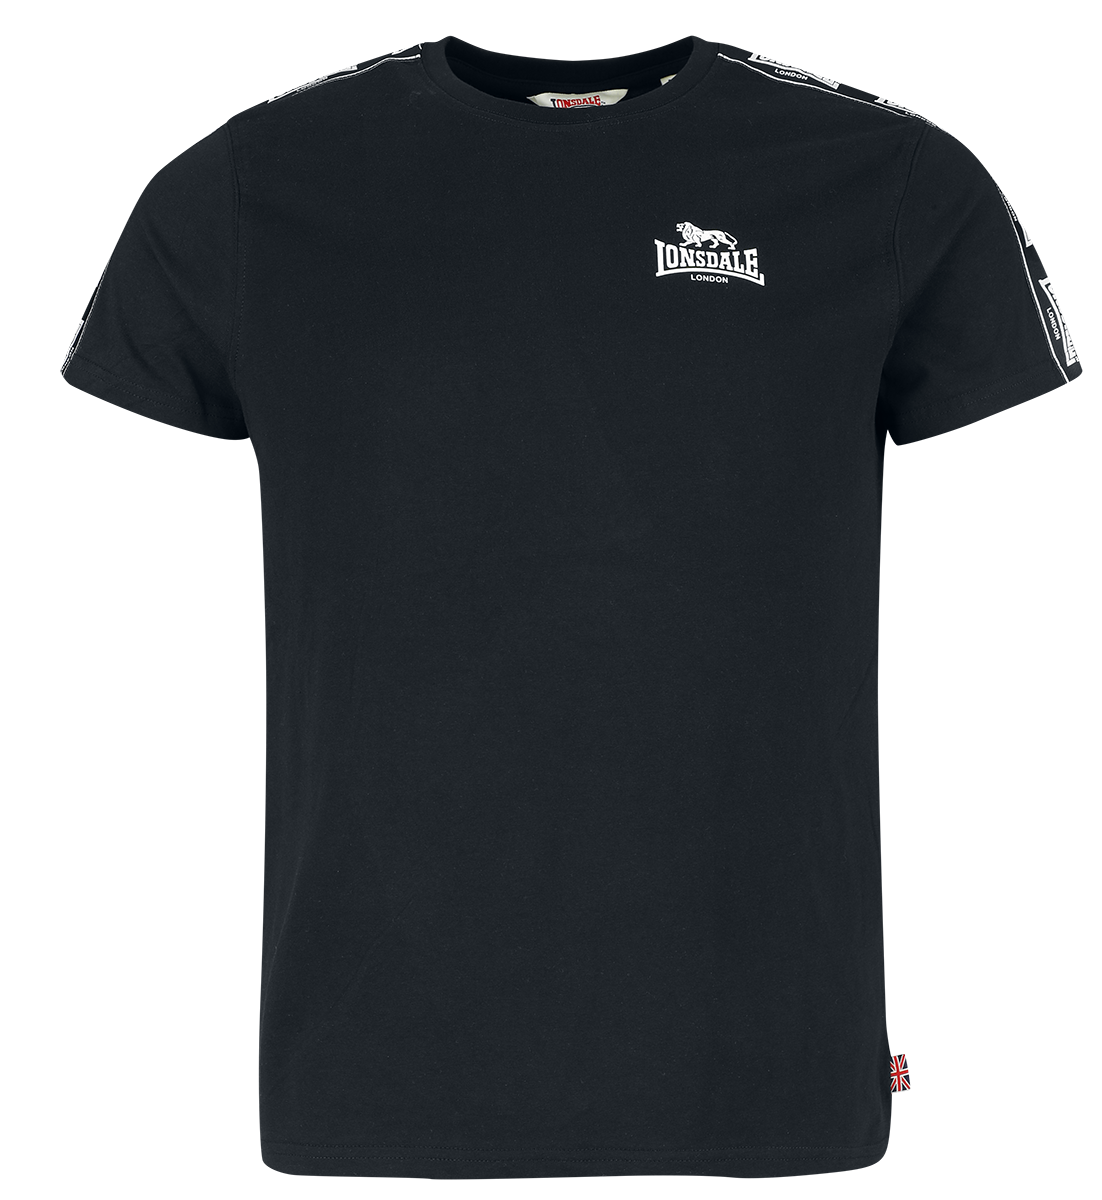 Lonsdale London - BRINDISTER - T-Shirt - schwarz